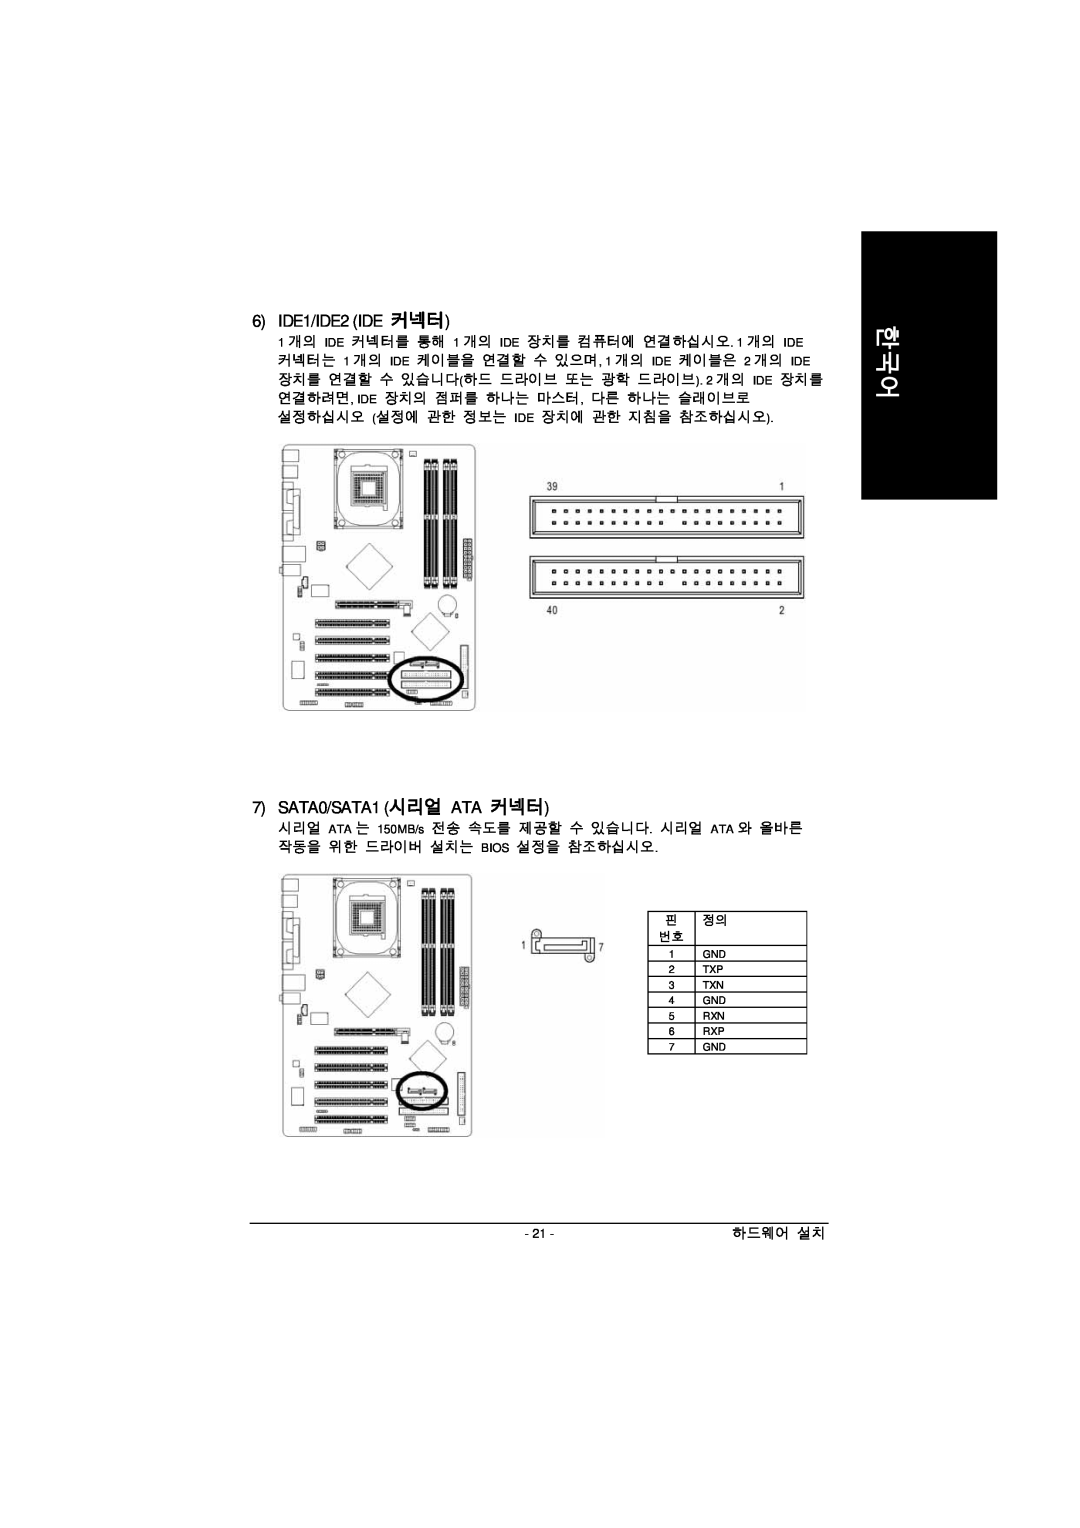 Intel GA-8IPE1000 manual 6 IDE1/IDE2 IDE 커넥터, SATA0/SATA1 시리얼 ATA 커넥터 